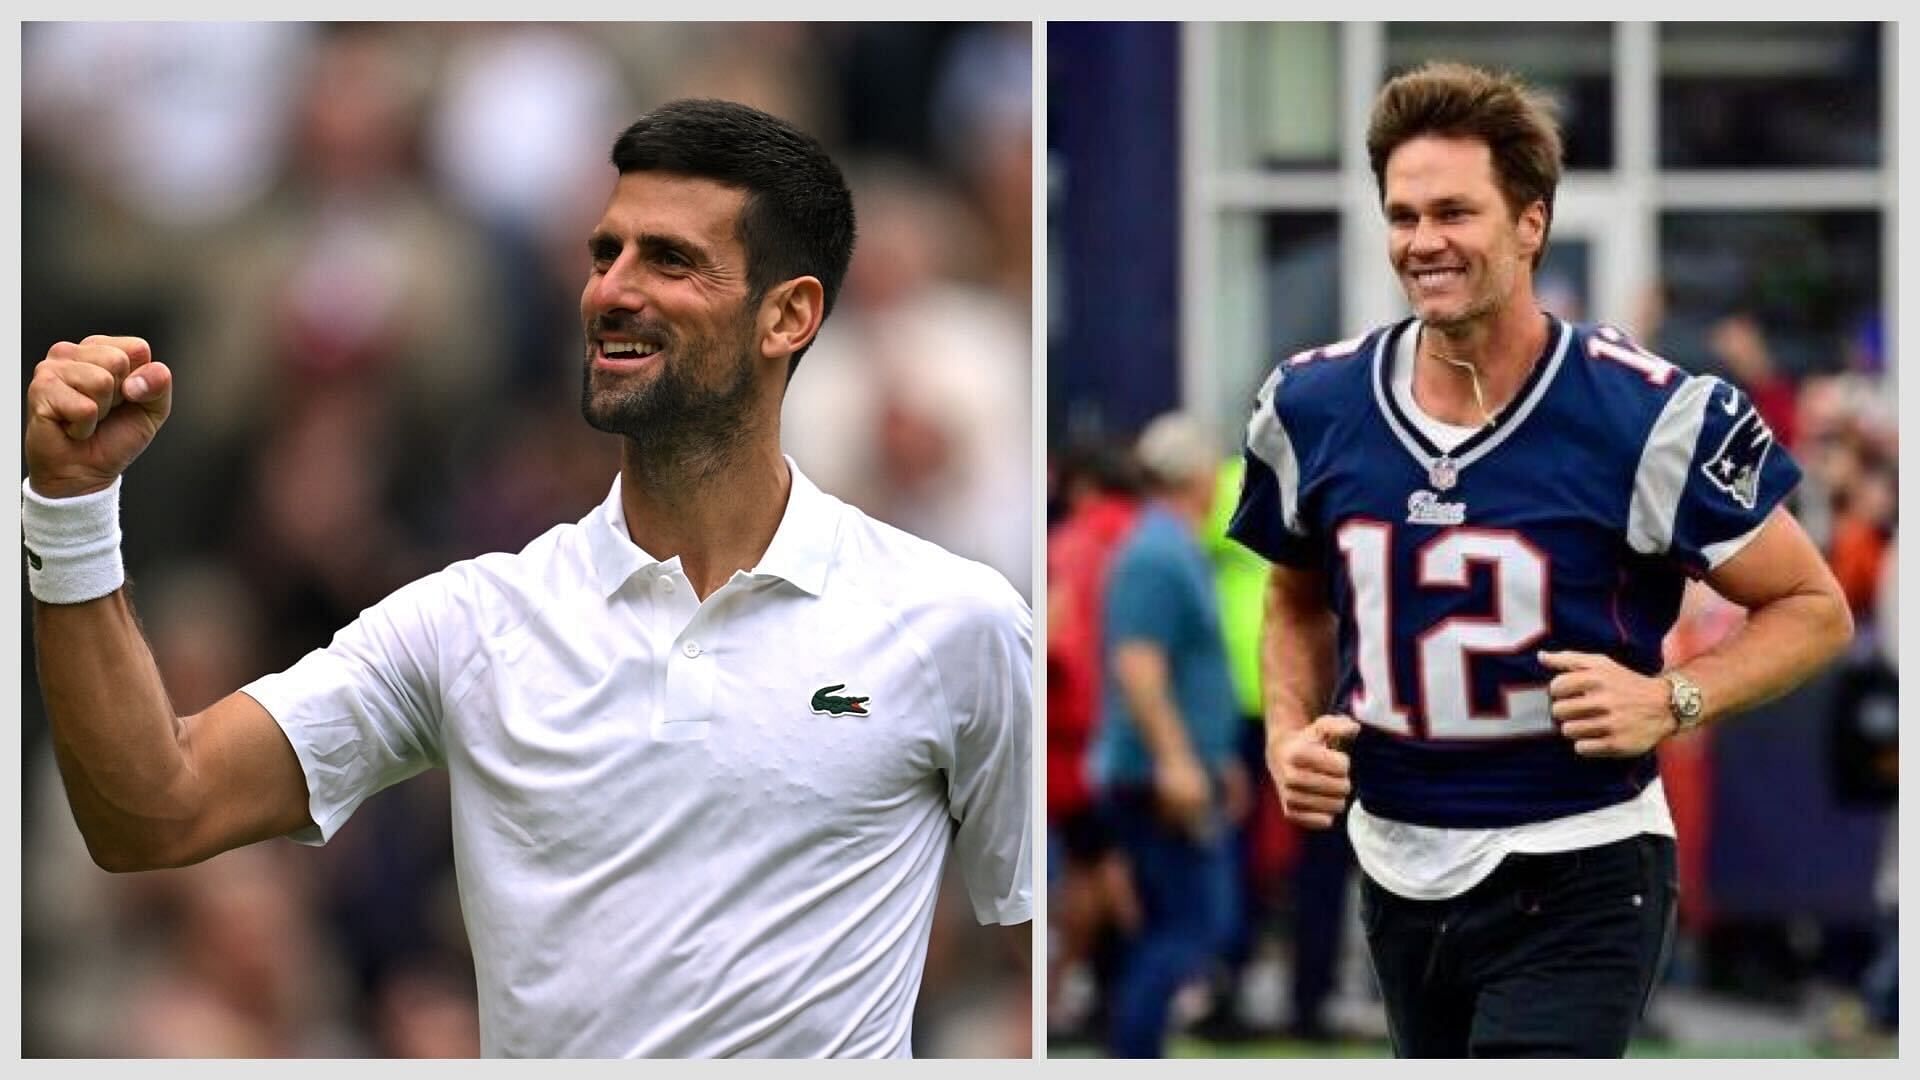 Greg Rusedski has compared Novak Djokovic with Tom Brady.